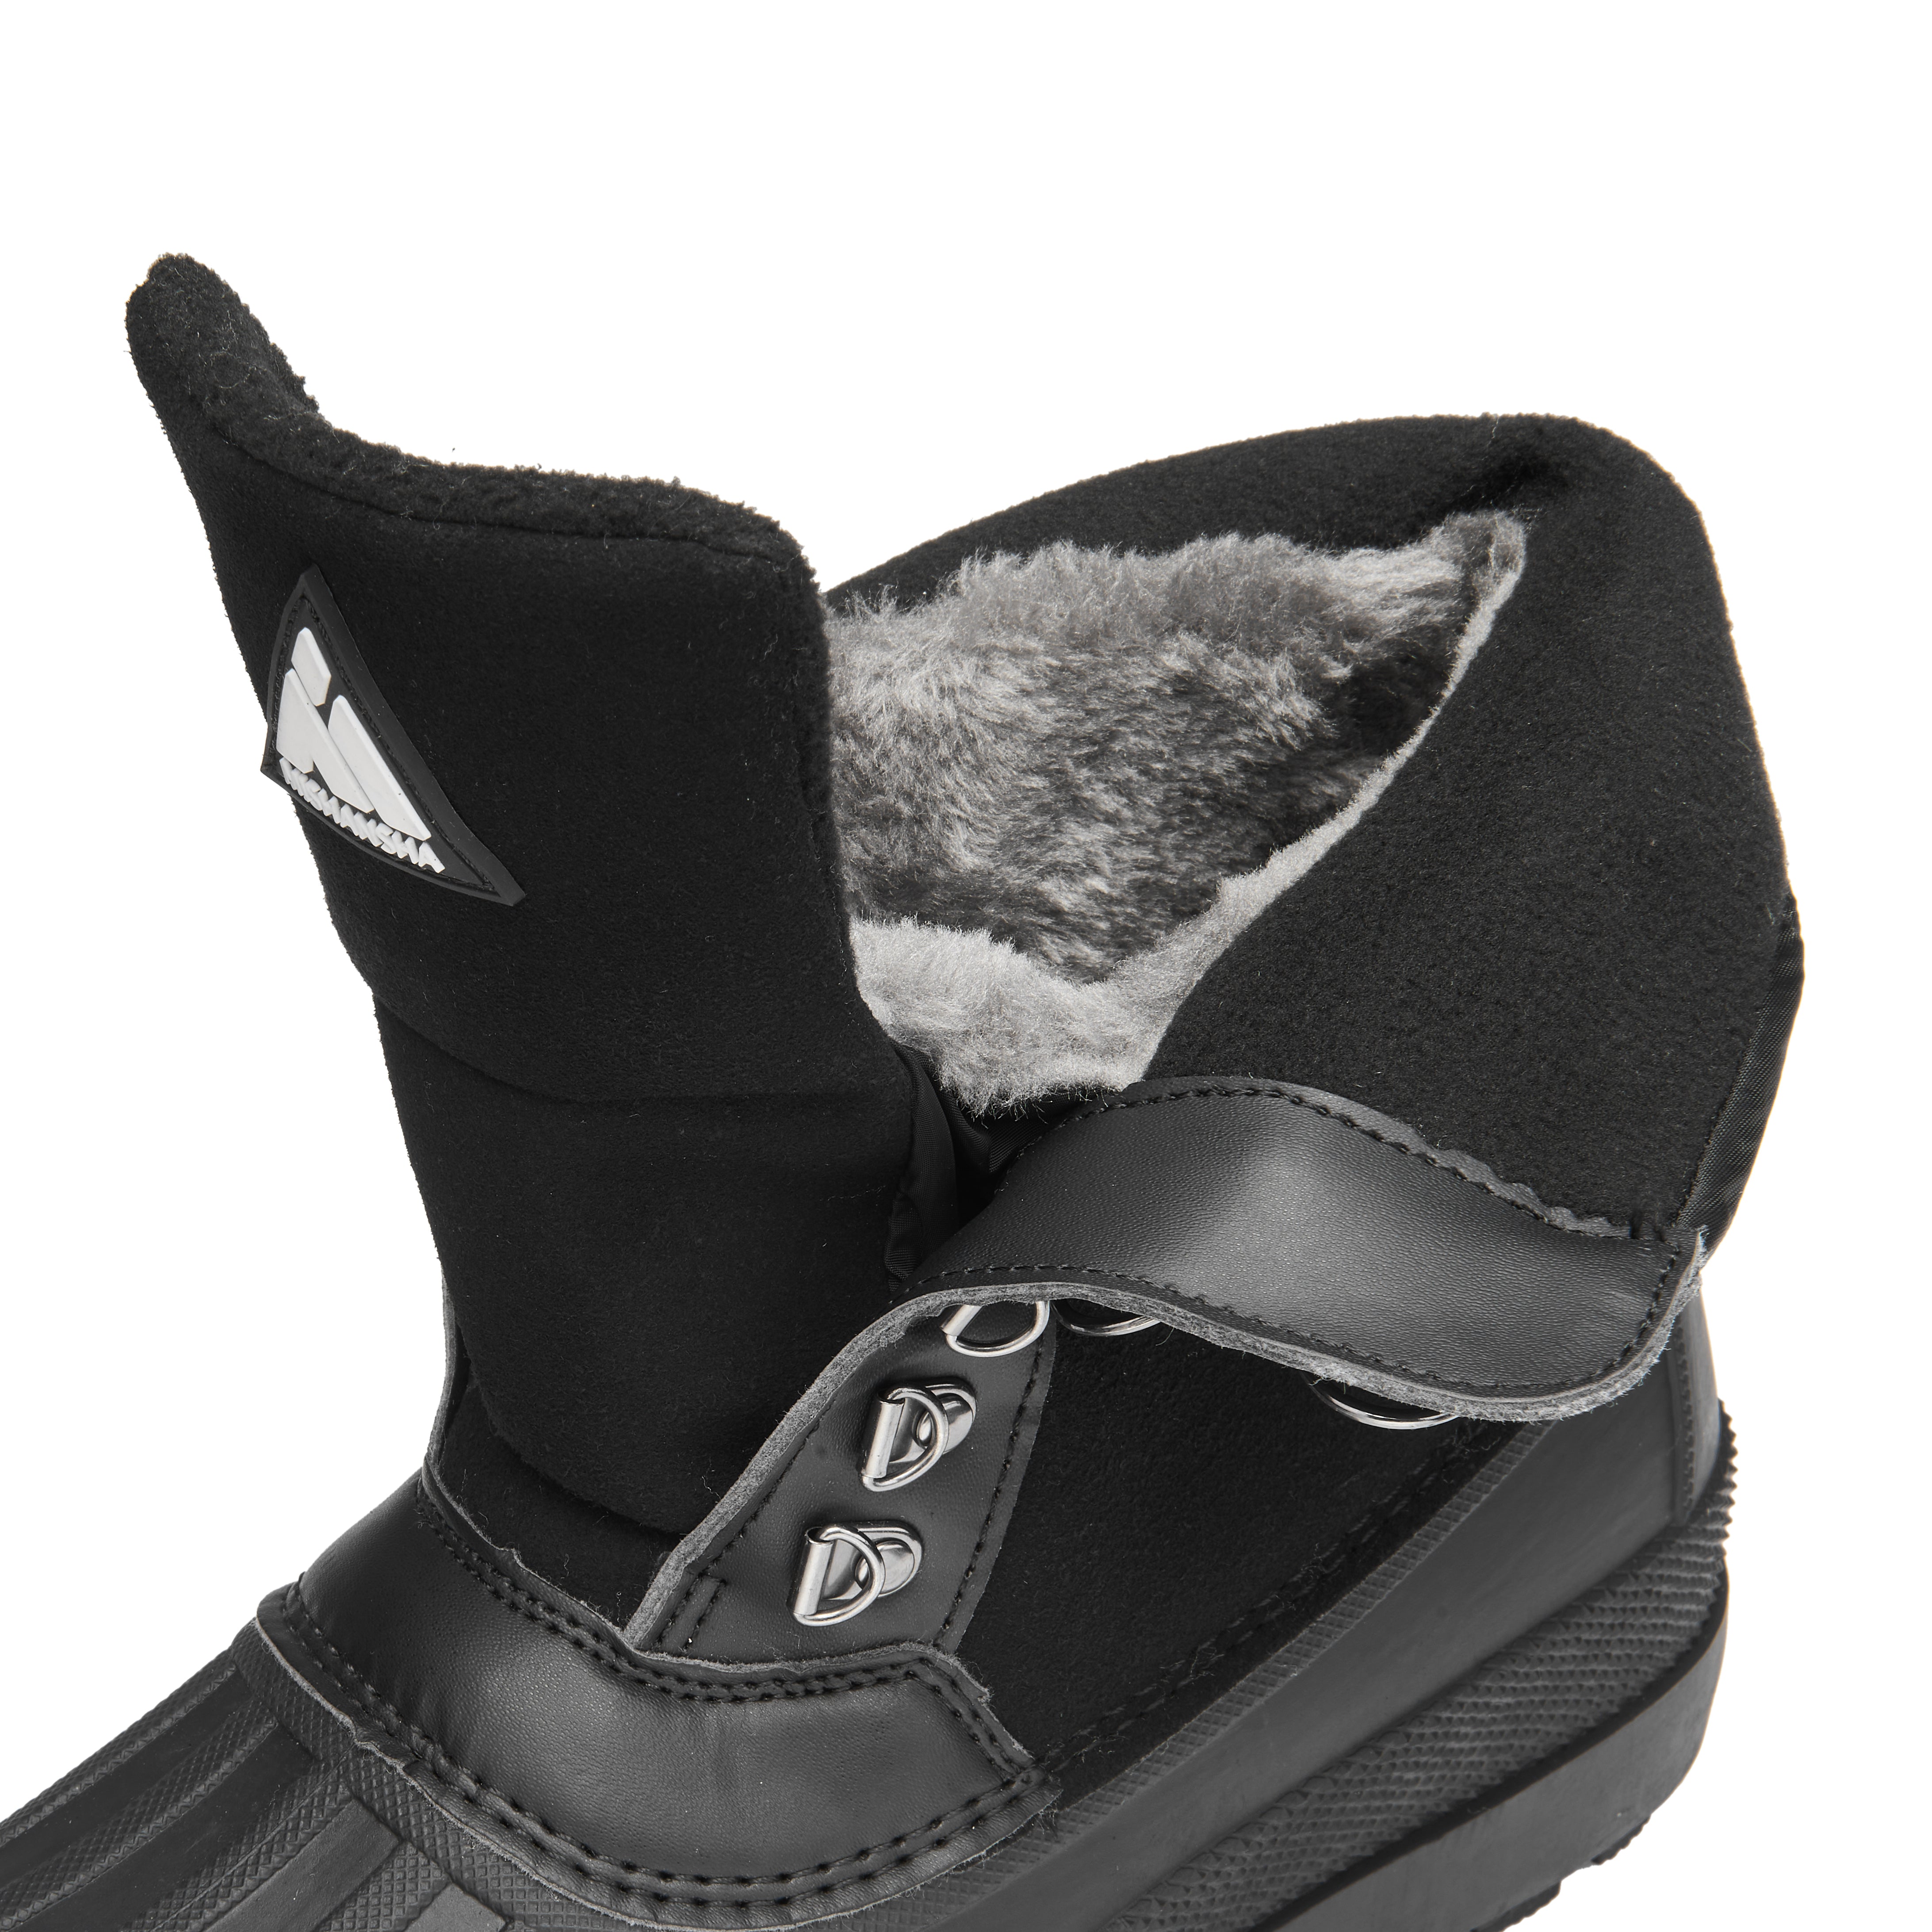  Mishansha Men's Snow Boots Waterproof Winter Boots Fur Lined  Duck Boots Insulated Winter Work Boots Black US 7